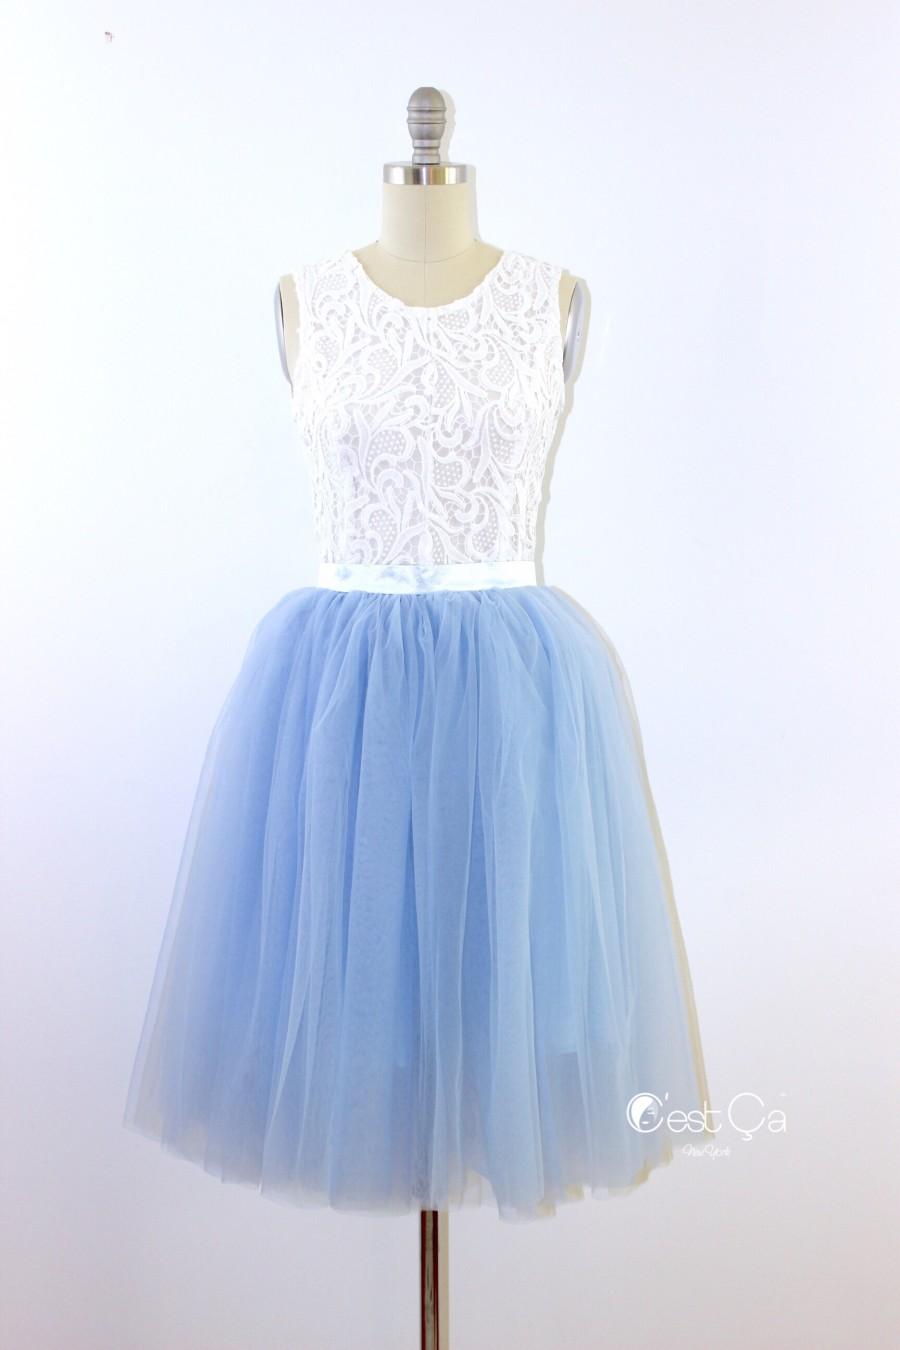 Hochzeit - Colette Serenity Blue Tulle Skirt - Length 26" - C'est Ça New York